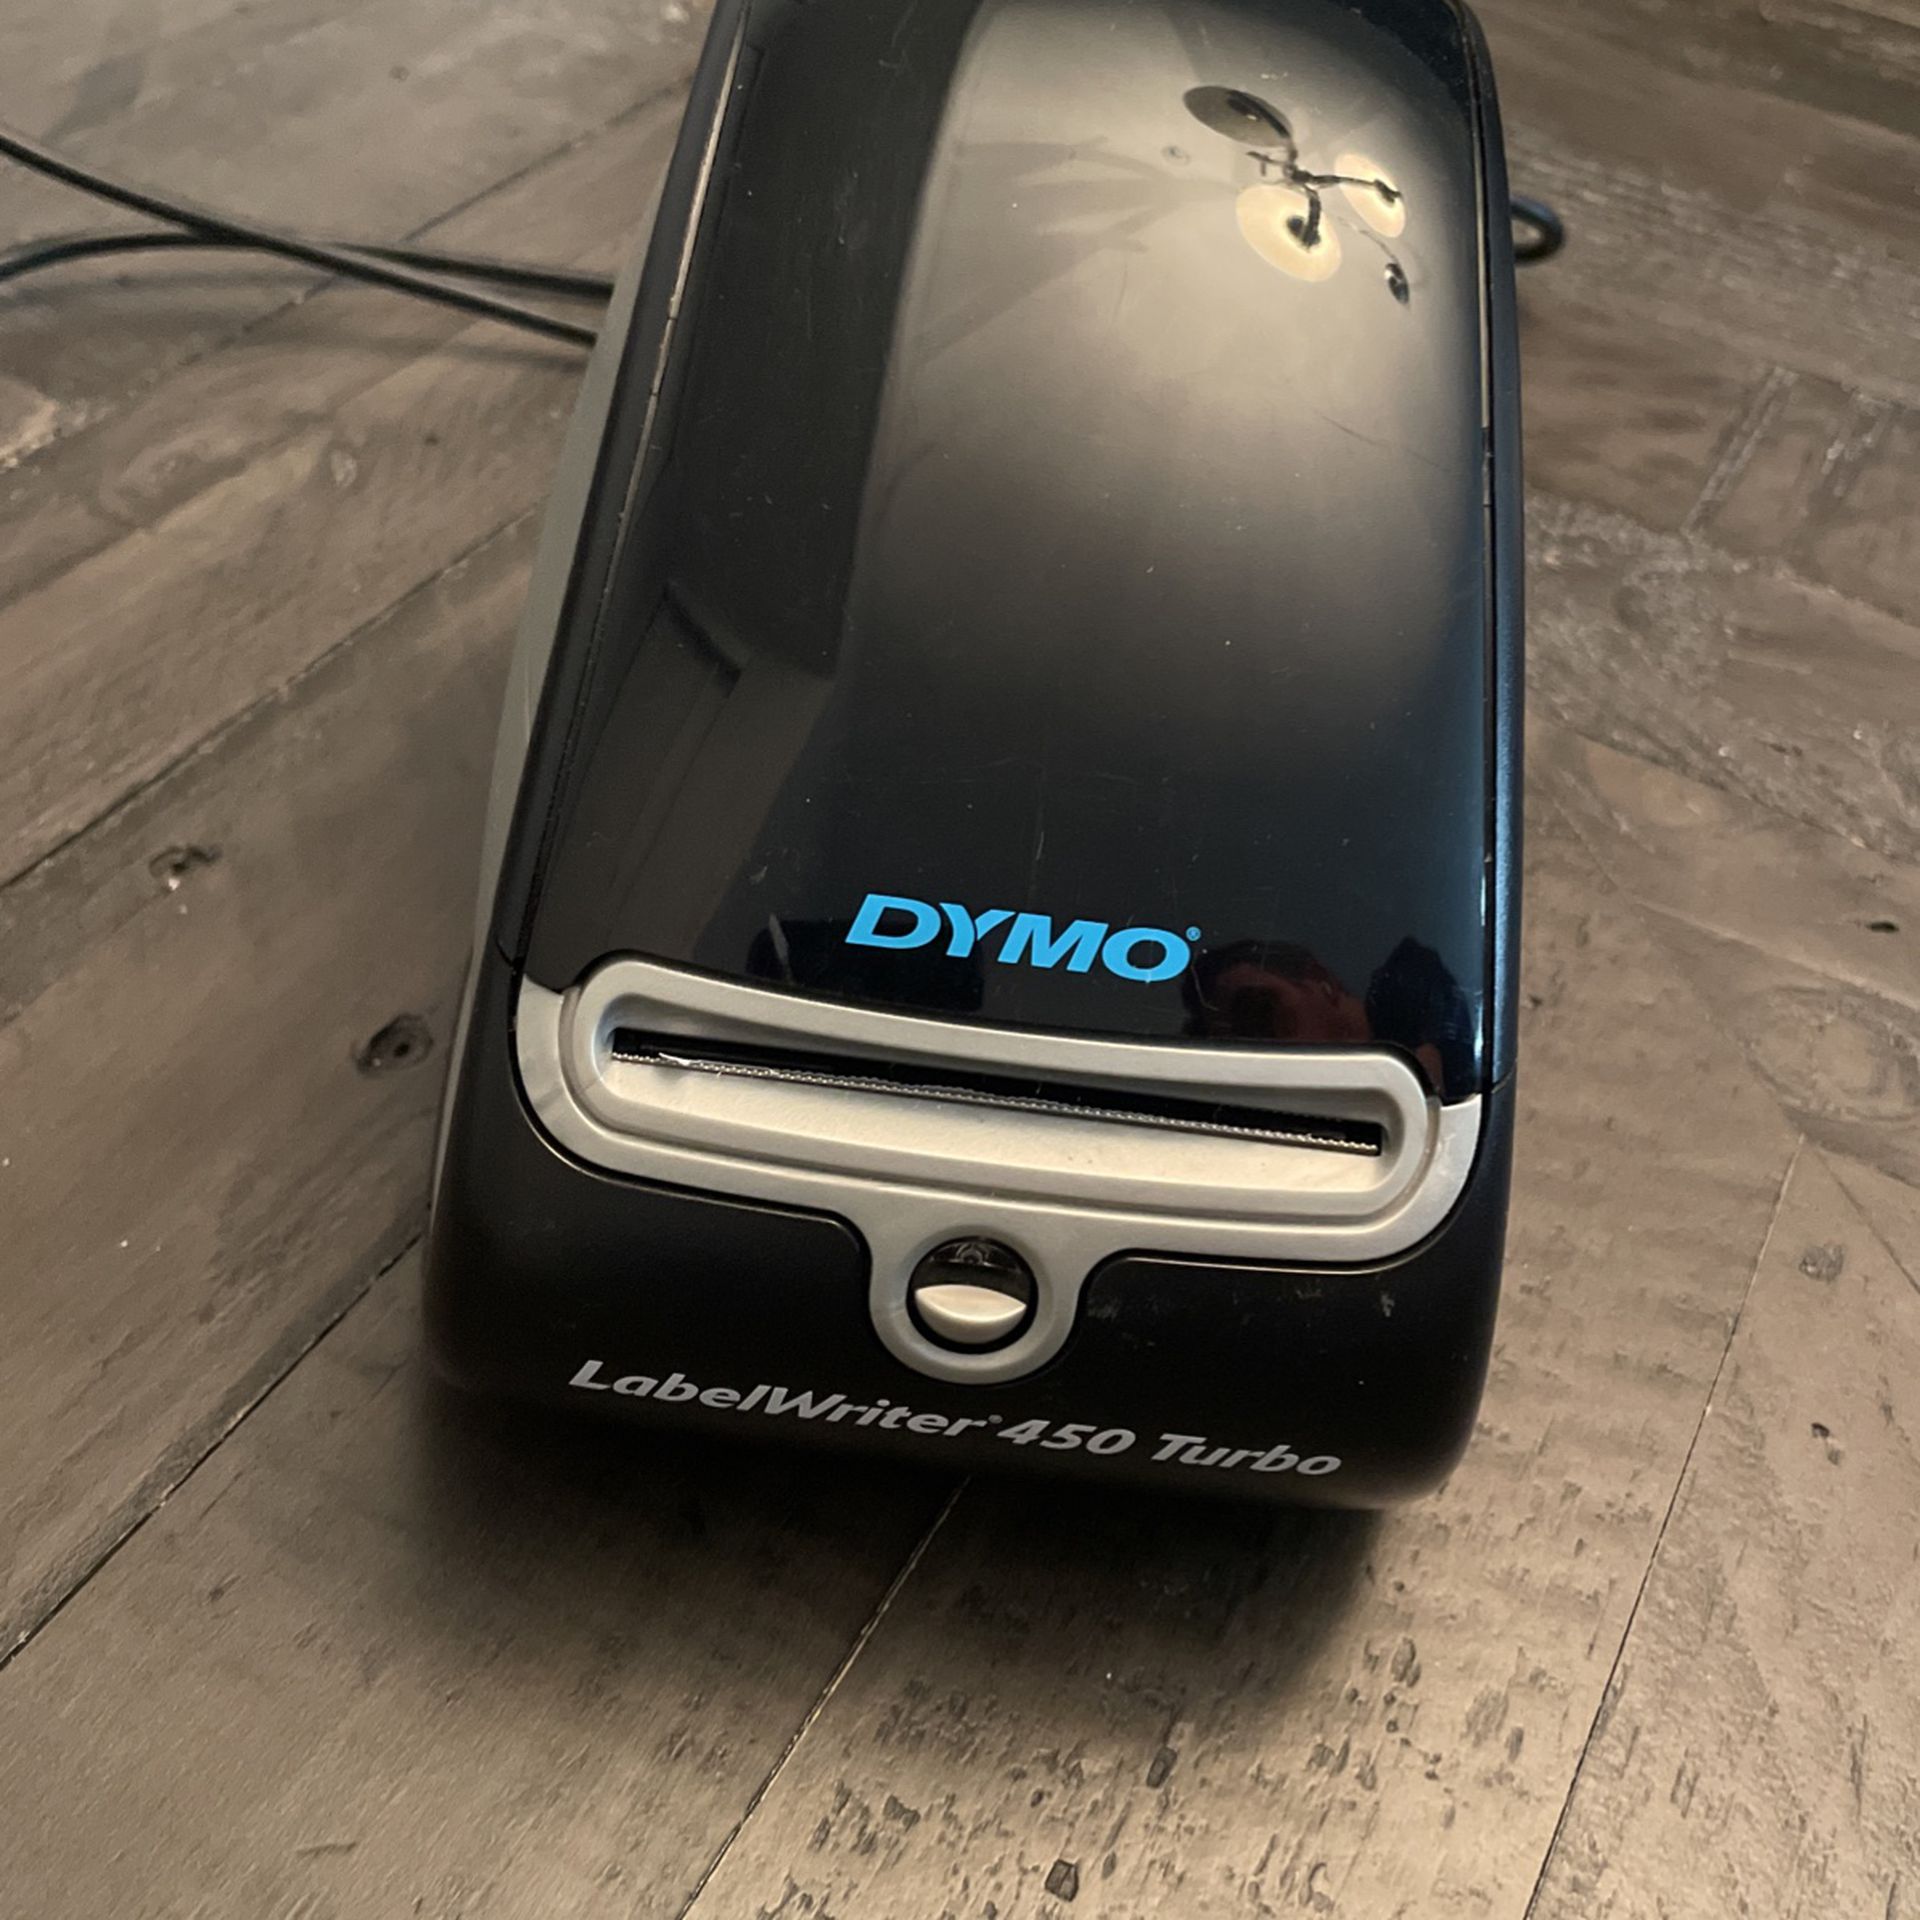 Dymo Label Writer 450 Turbo 